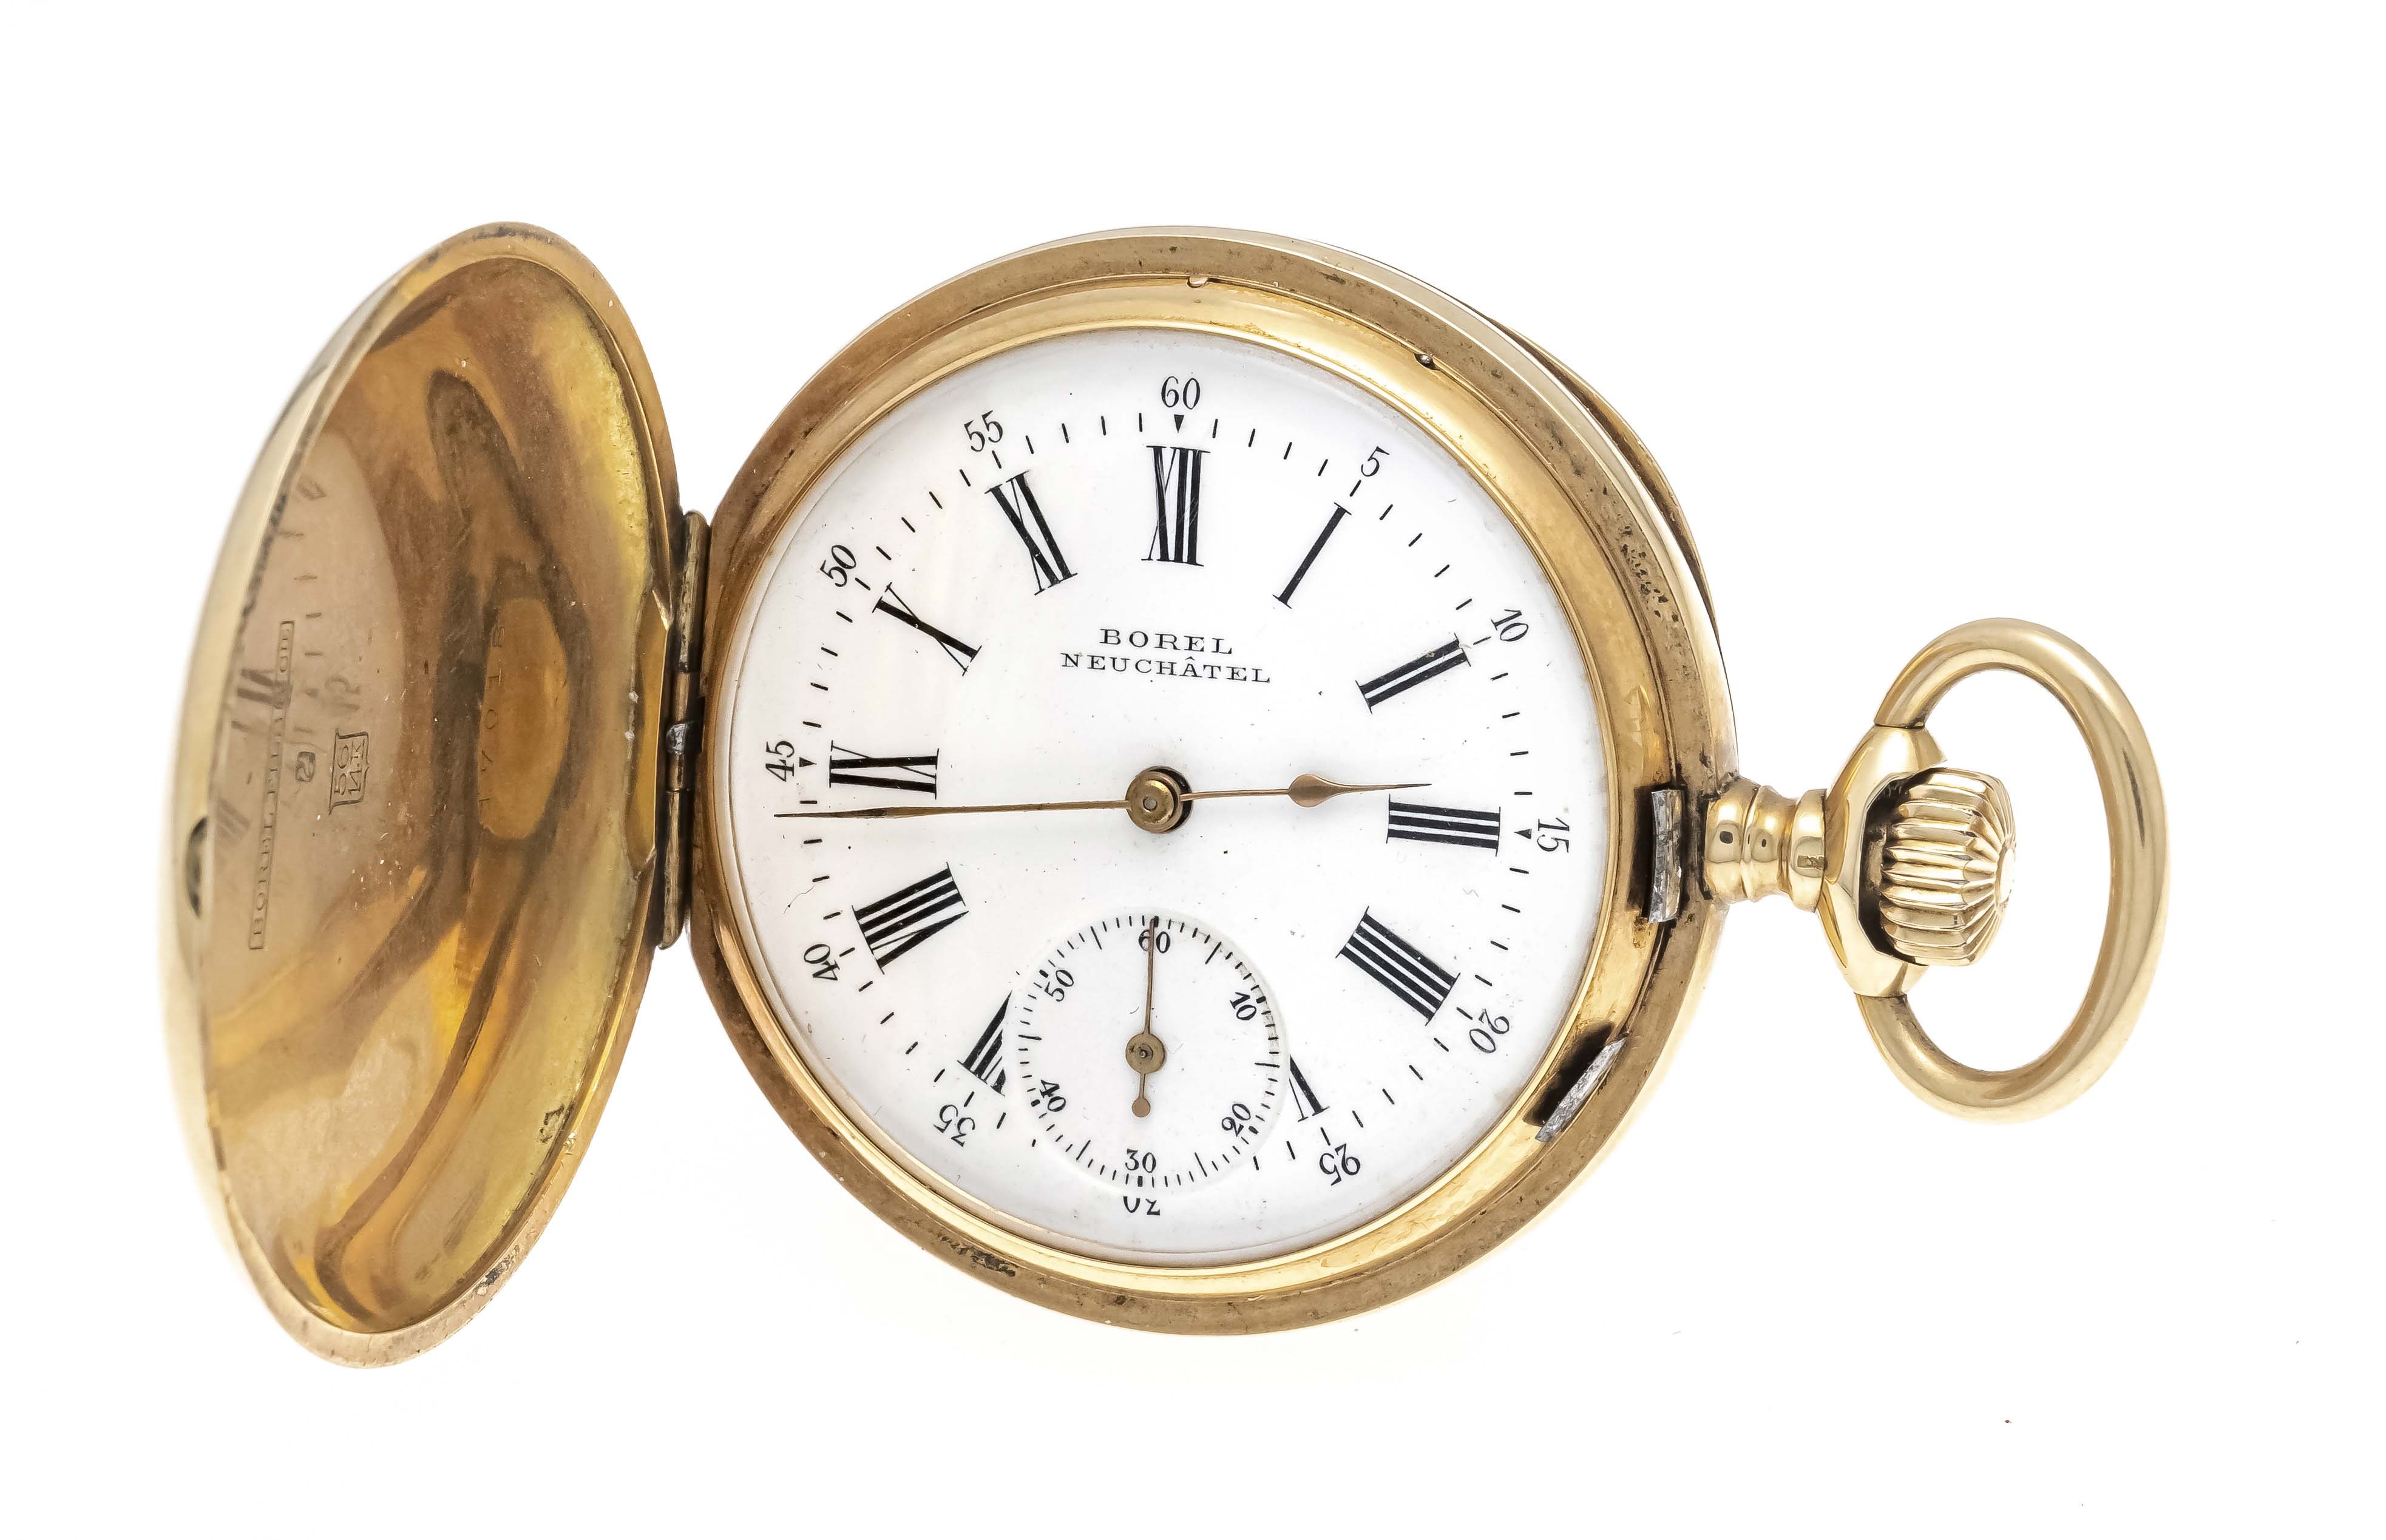 Men's sprung lid pocket watch, Borel Neuchatel, 585/000 GG, 3 gold lids, polished case, circa